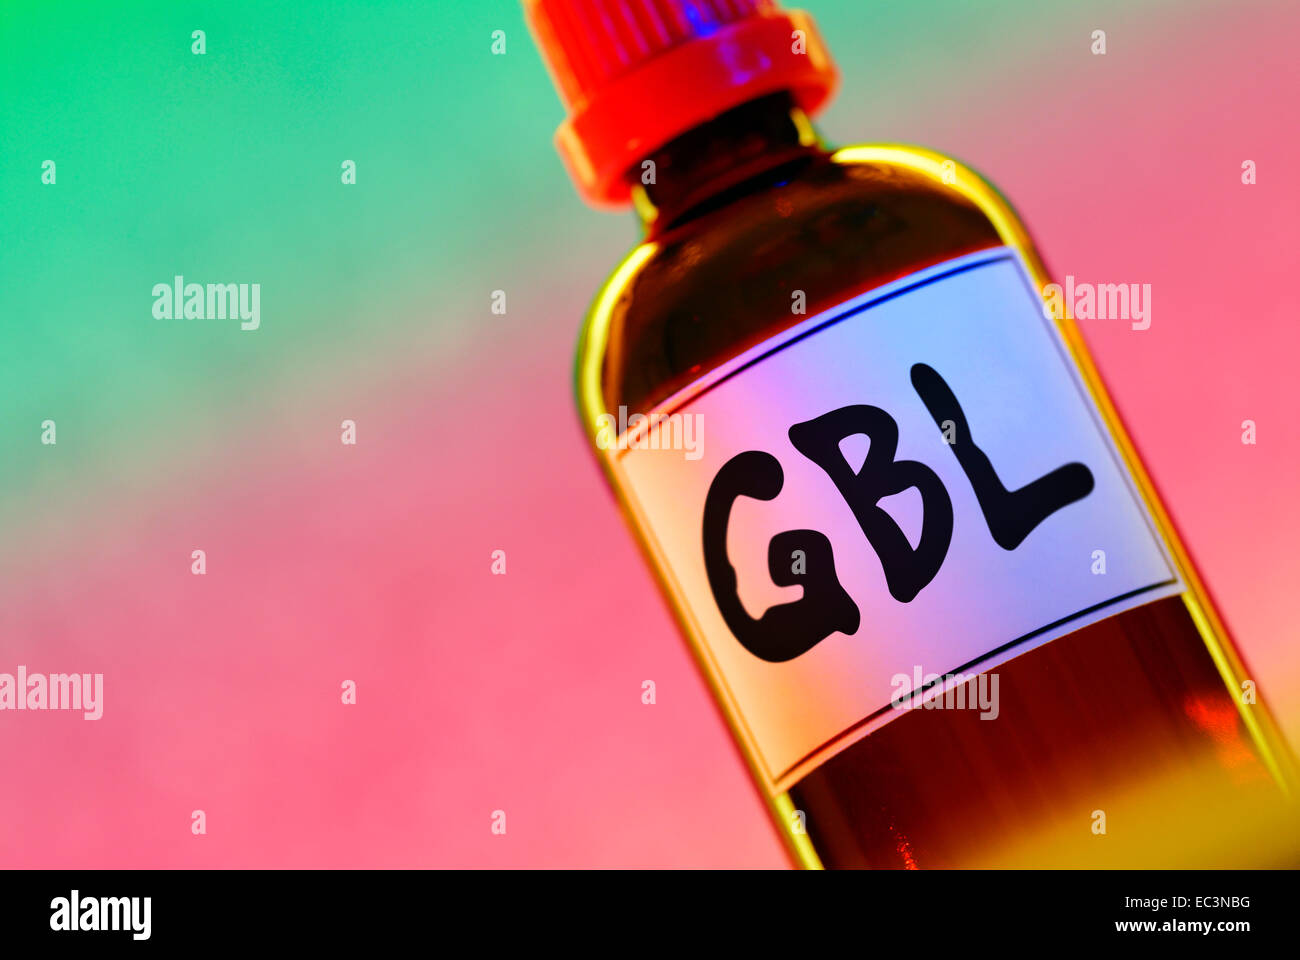 Gbl Drug Wiki